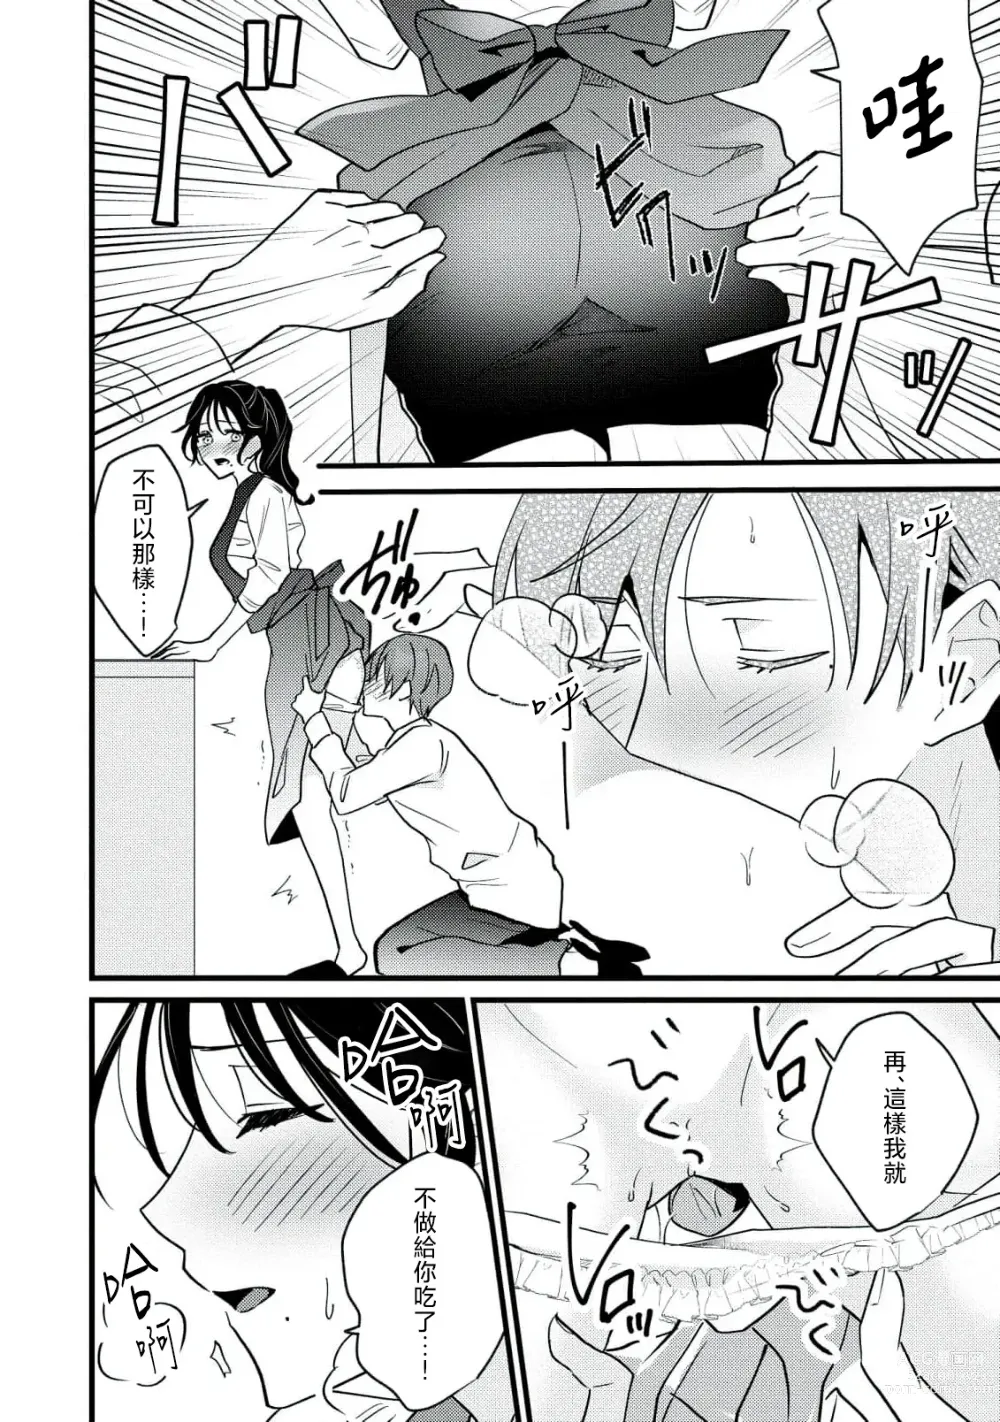 Page 81 of manga Dog or Teacher-放学后，老师们的调教恋爱- Class.1-3